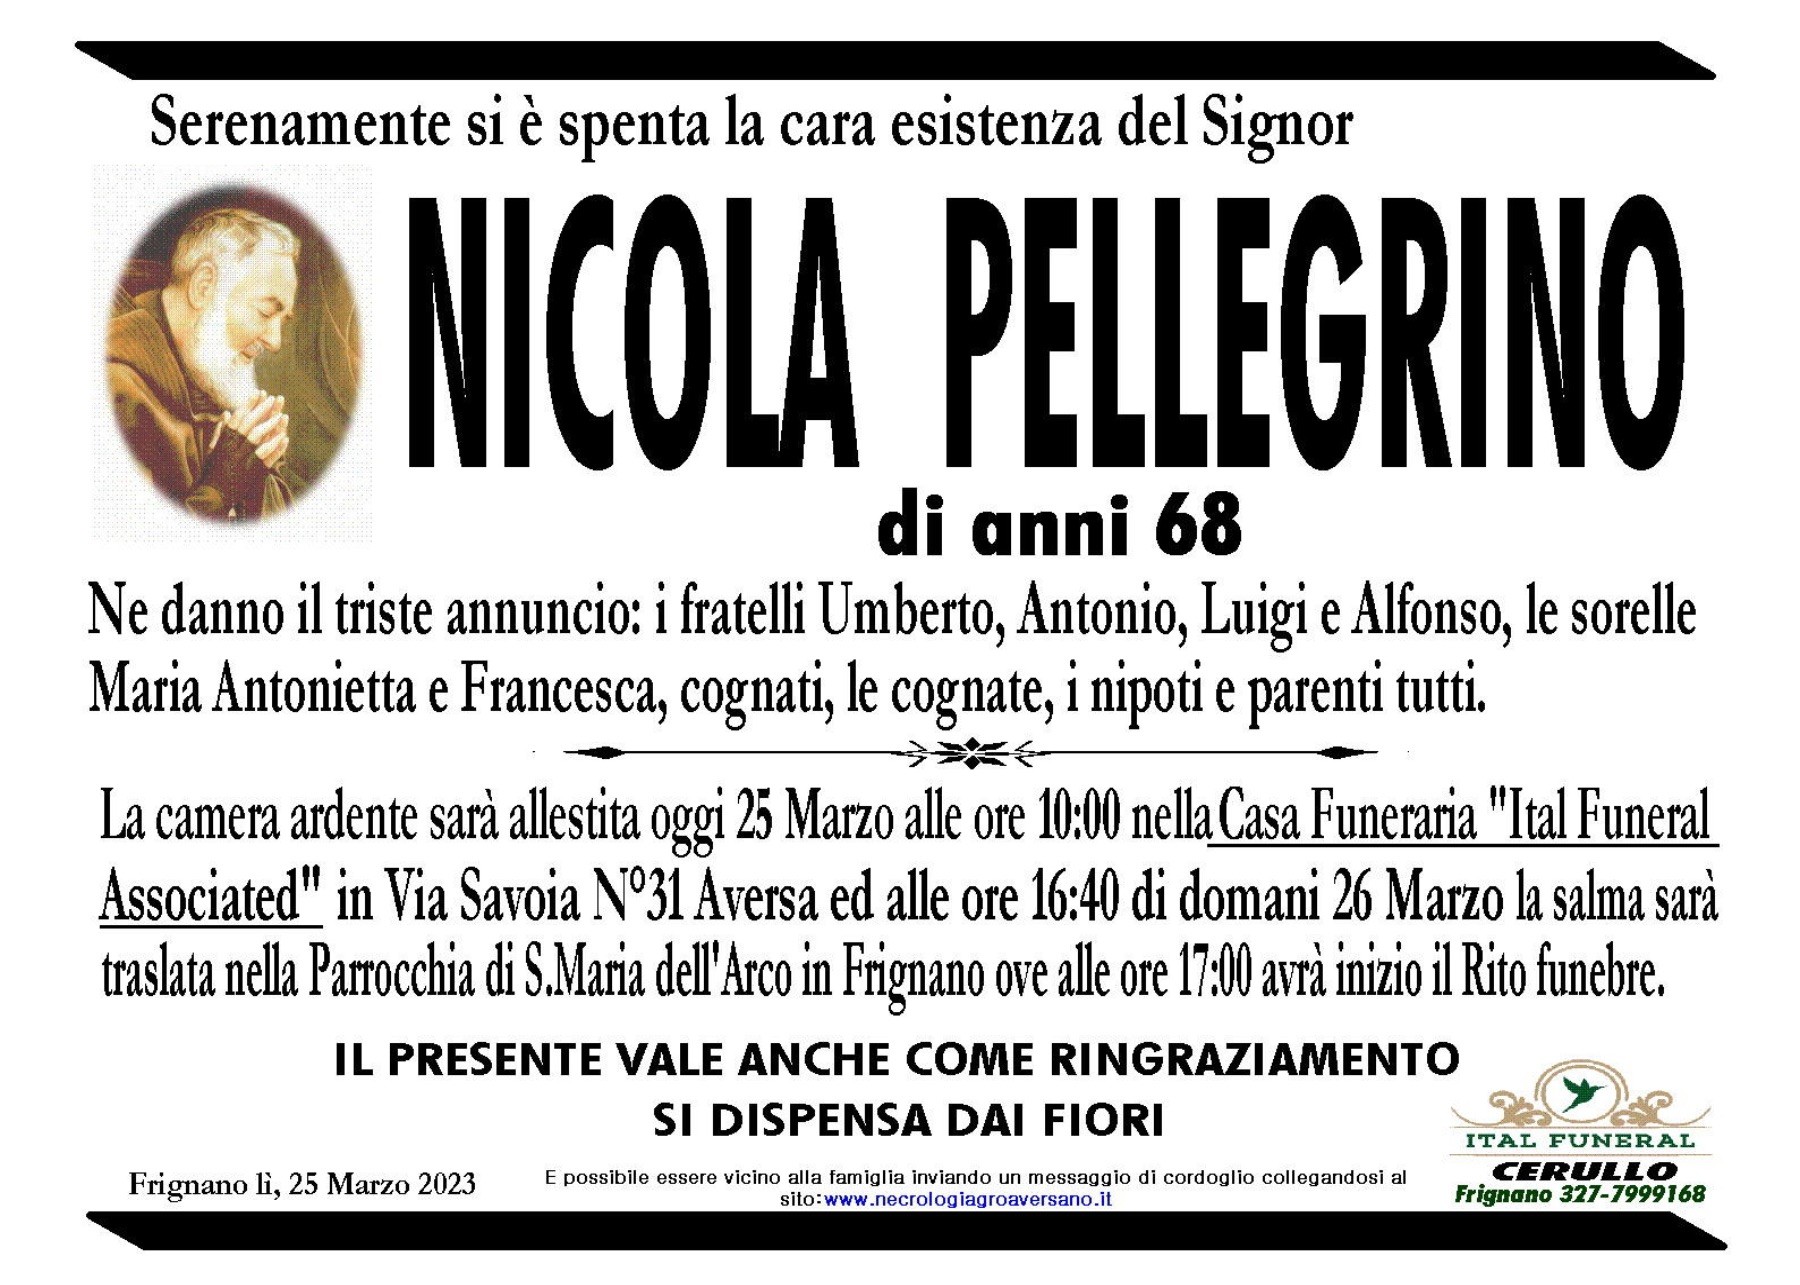 Nicola Pellegrino